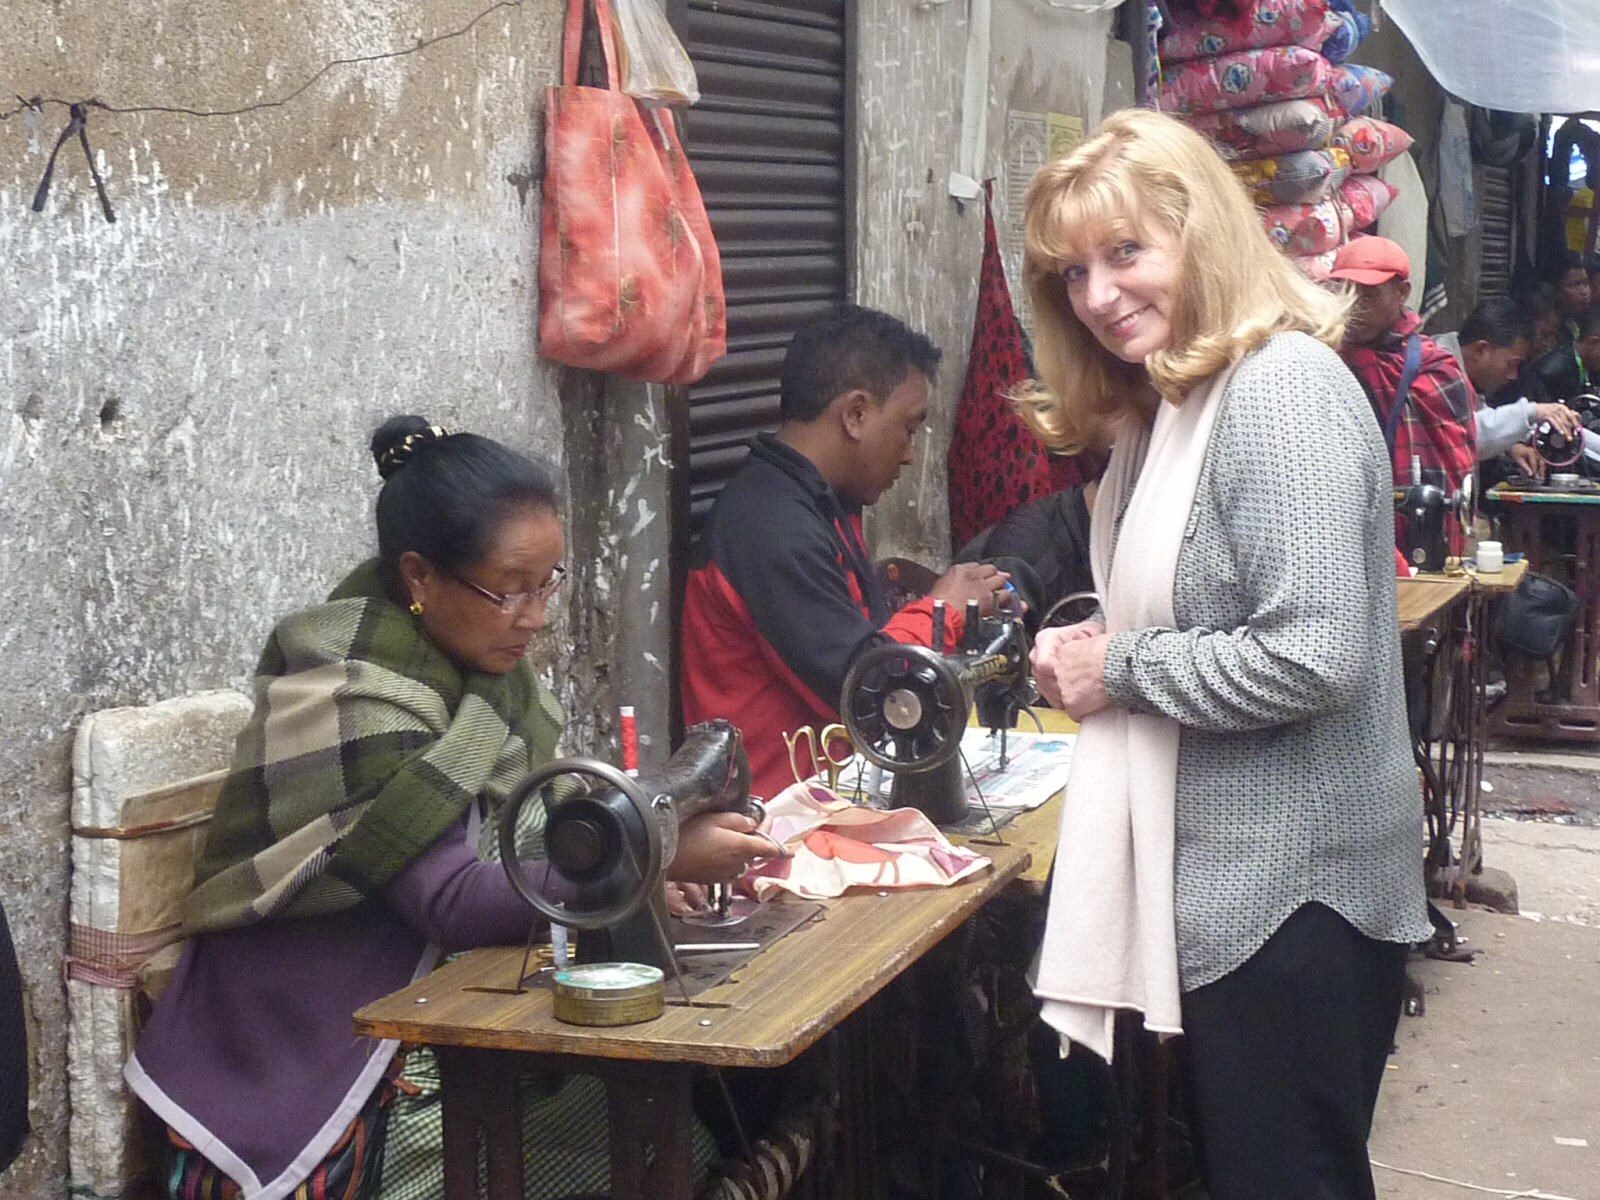 Clothes mending in Shillong bazaar, Meghalaya state